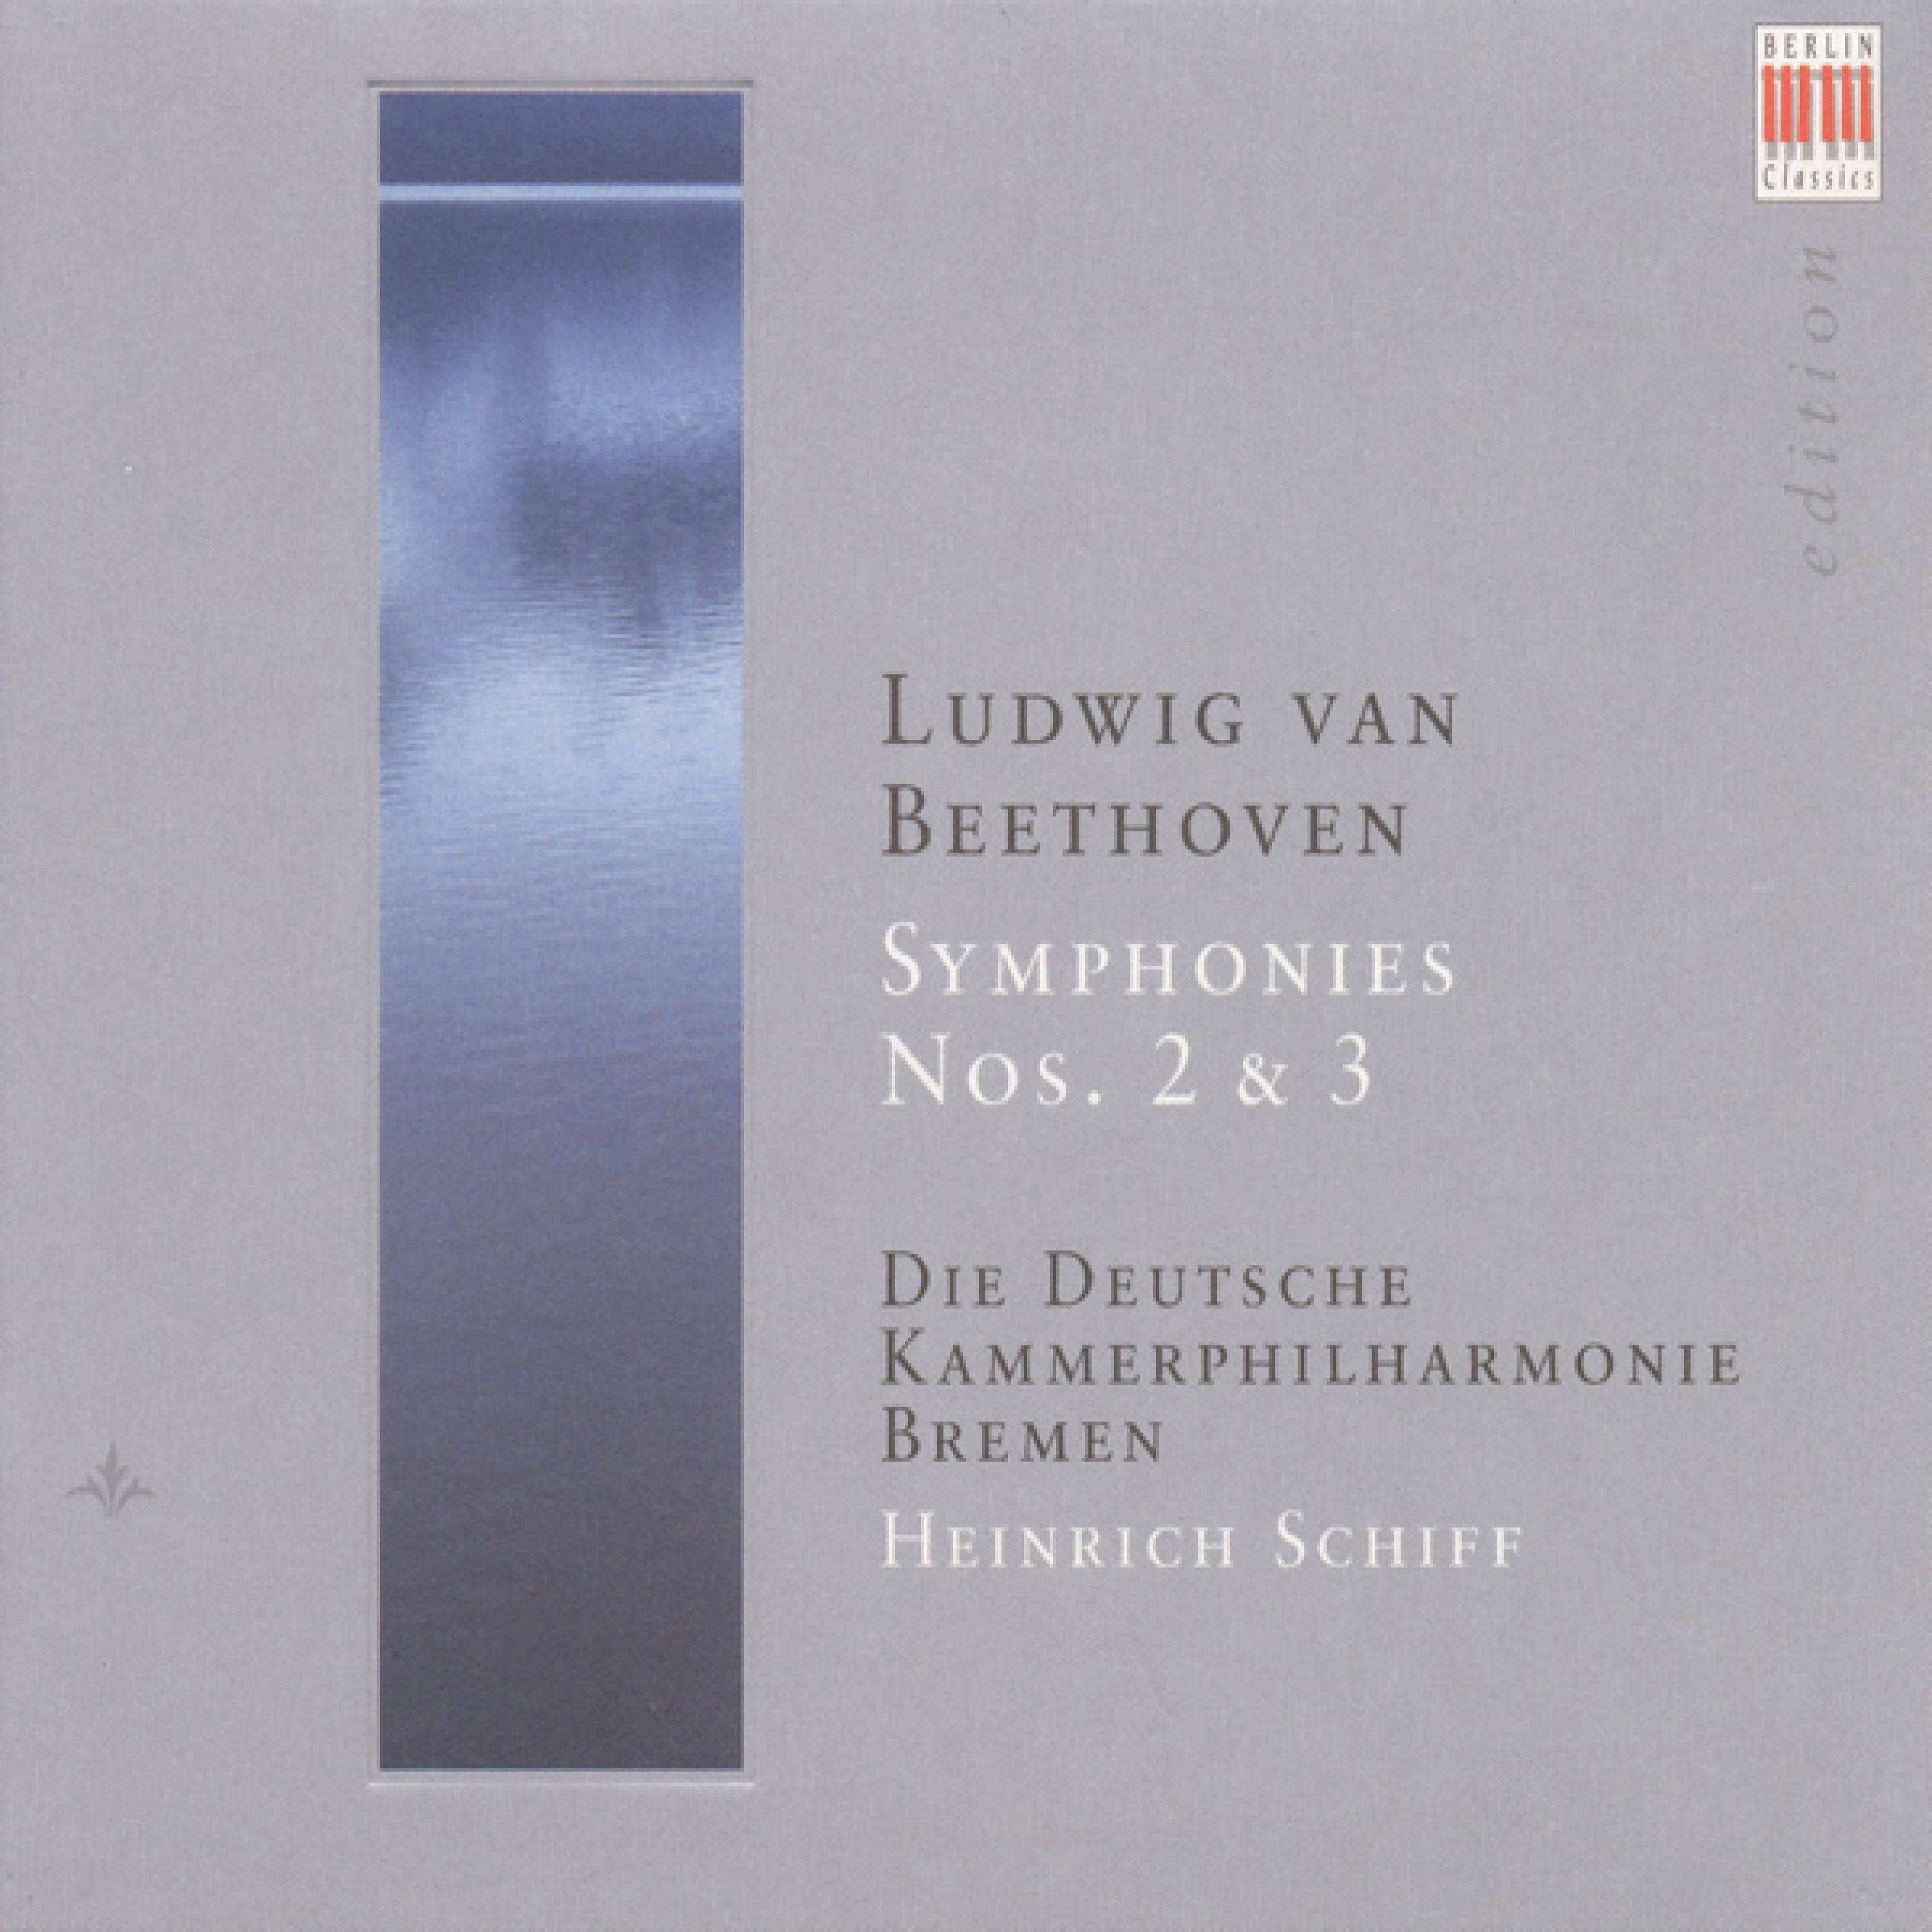 Ludwig van Beethoven: Symphonies Nos. 2 and 3 (Bremen German Chamber Philharmonic, H. Schiff)